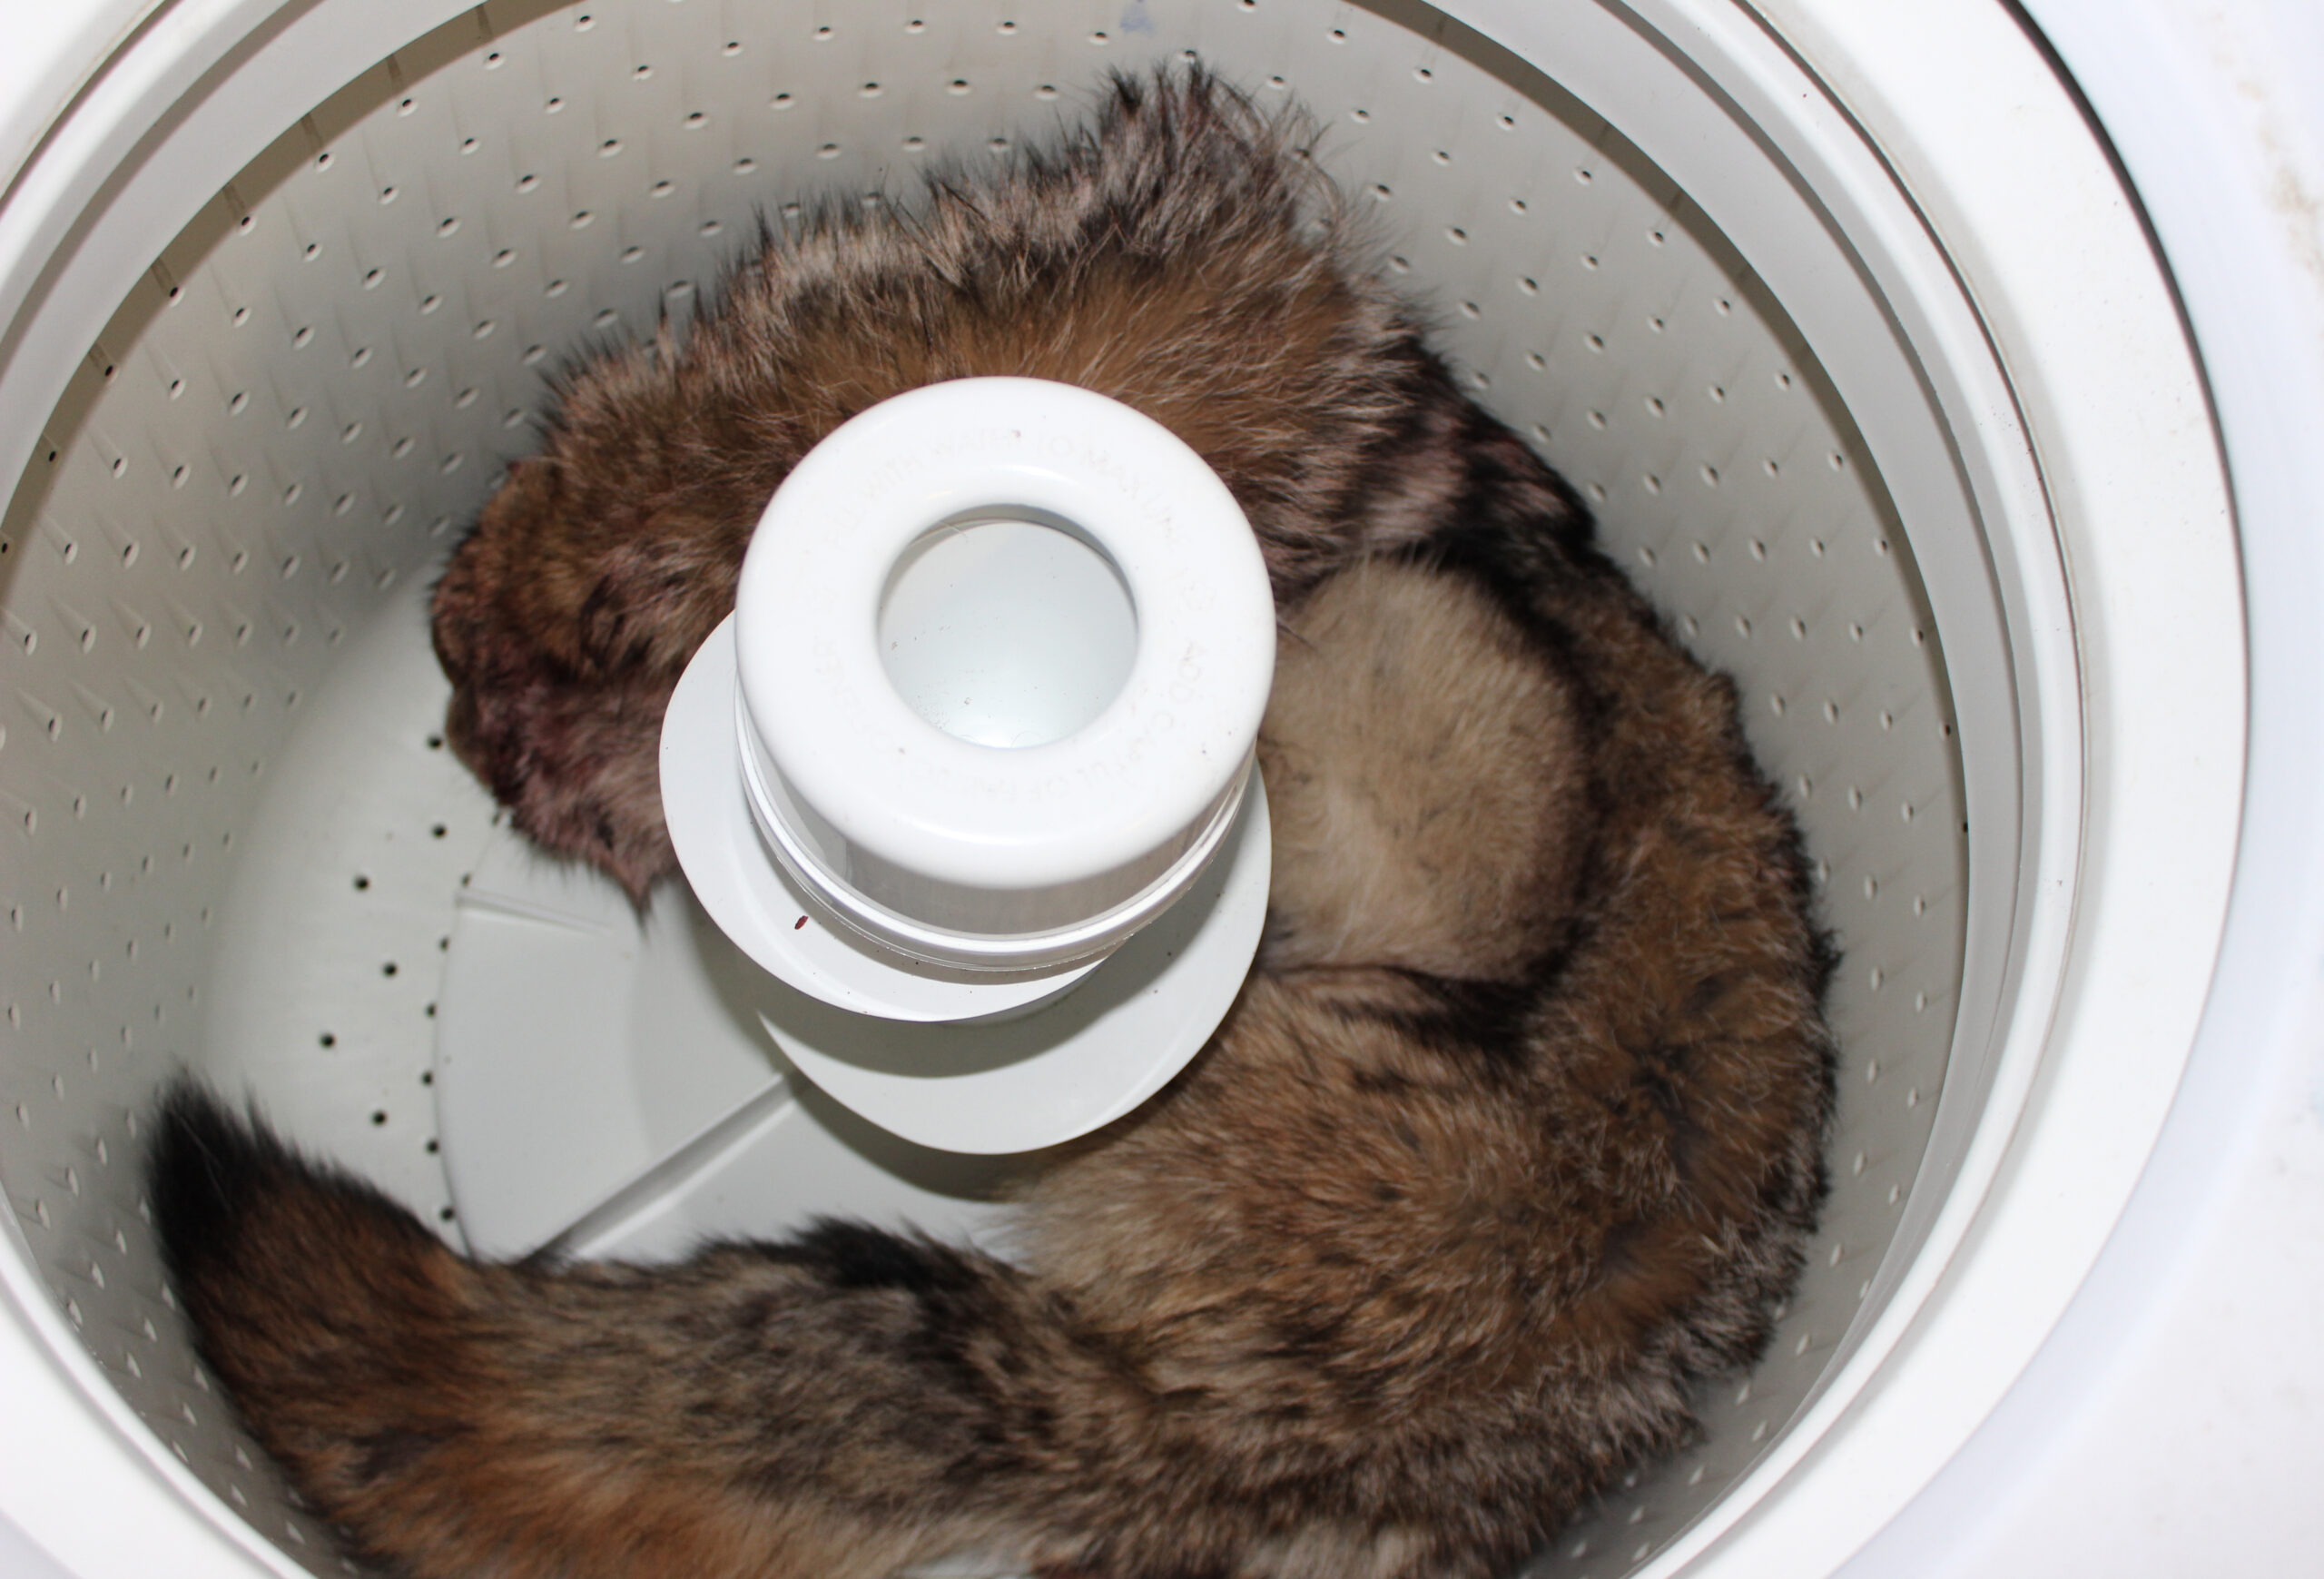 A coyote hide in a washing machine.